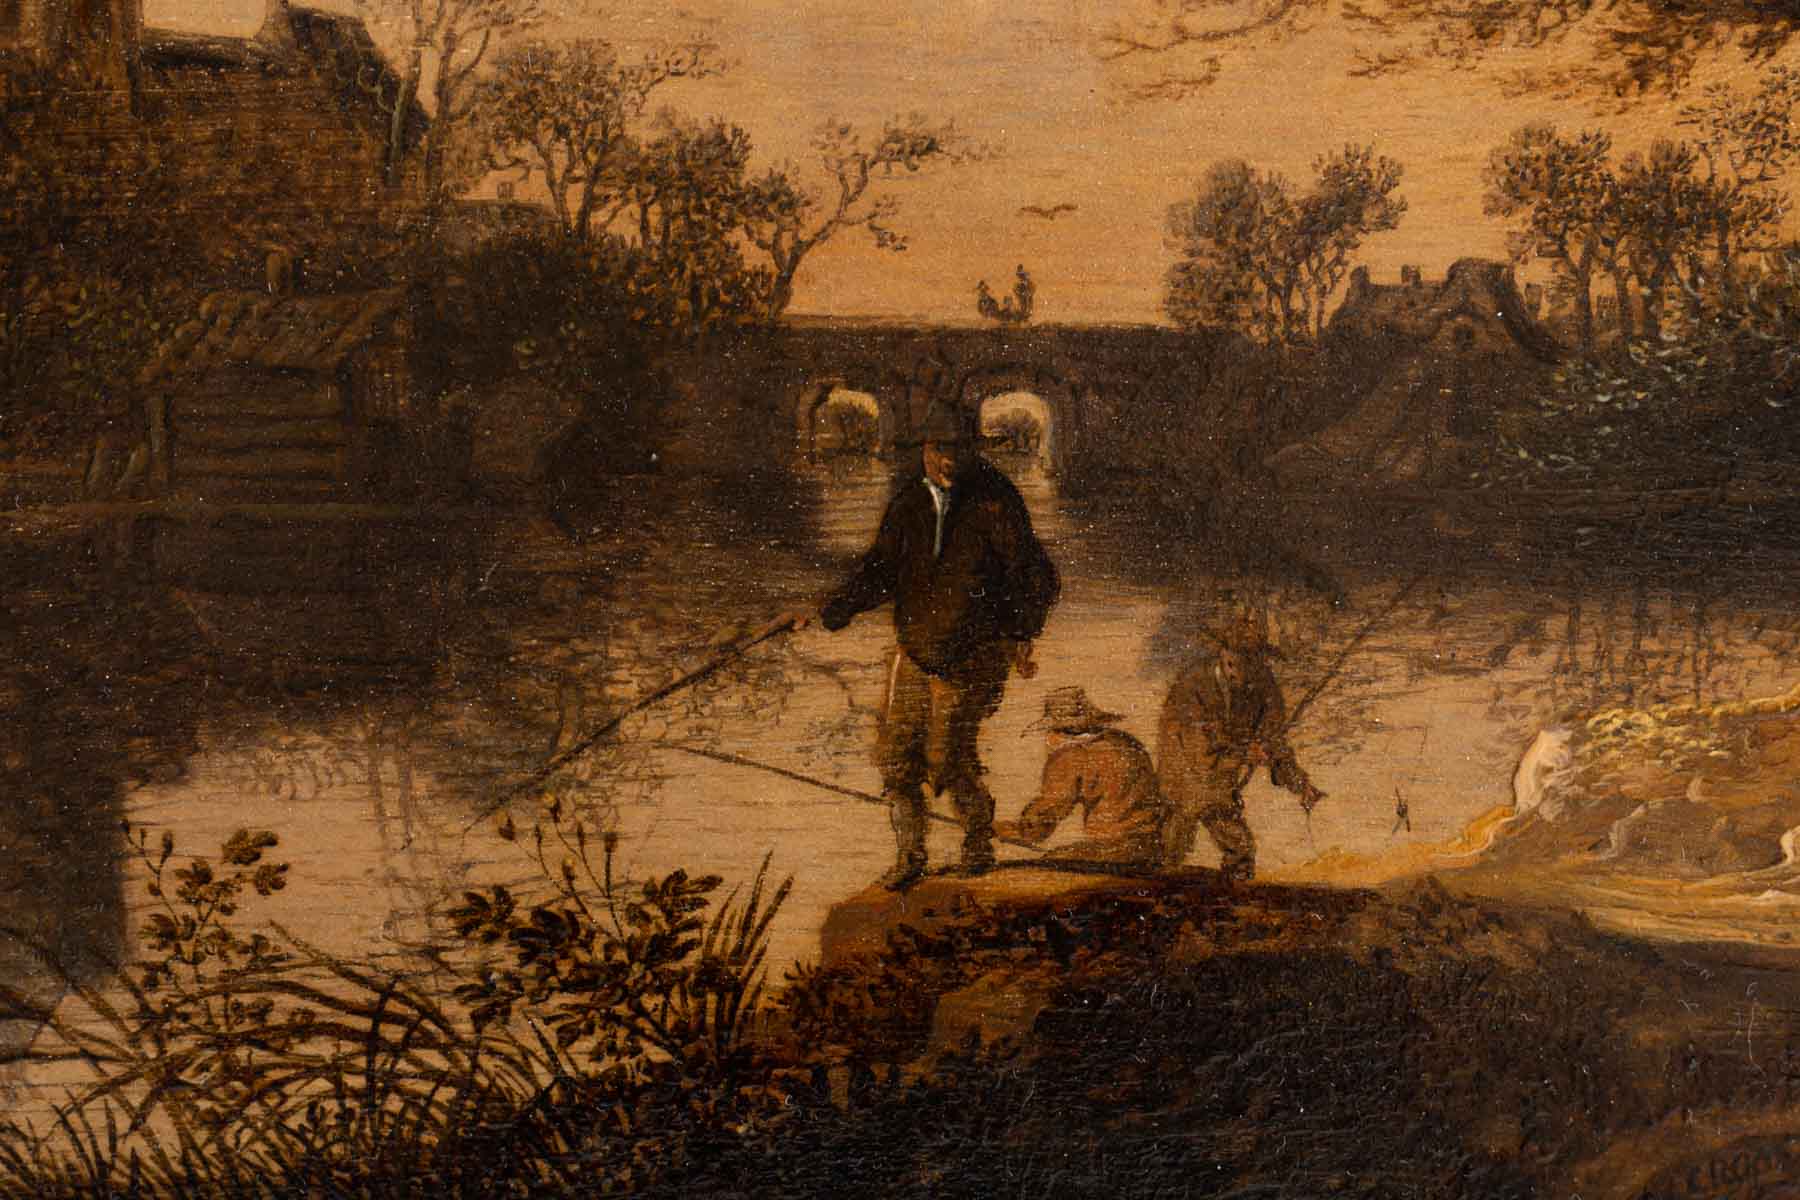 Anthony Jansz Van der Croos (1606, 1662)